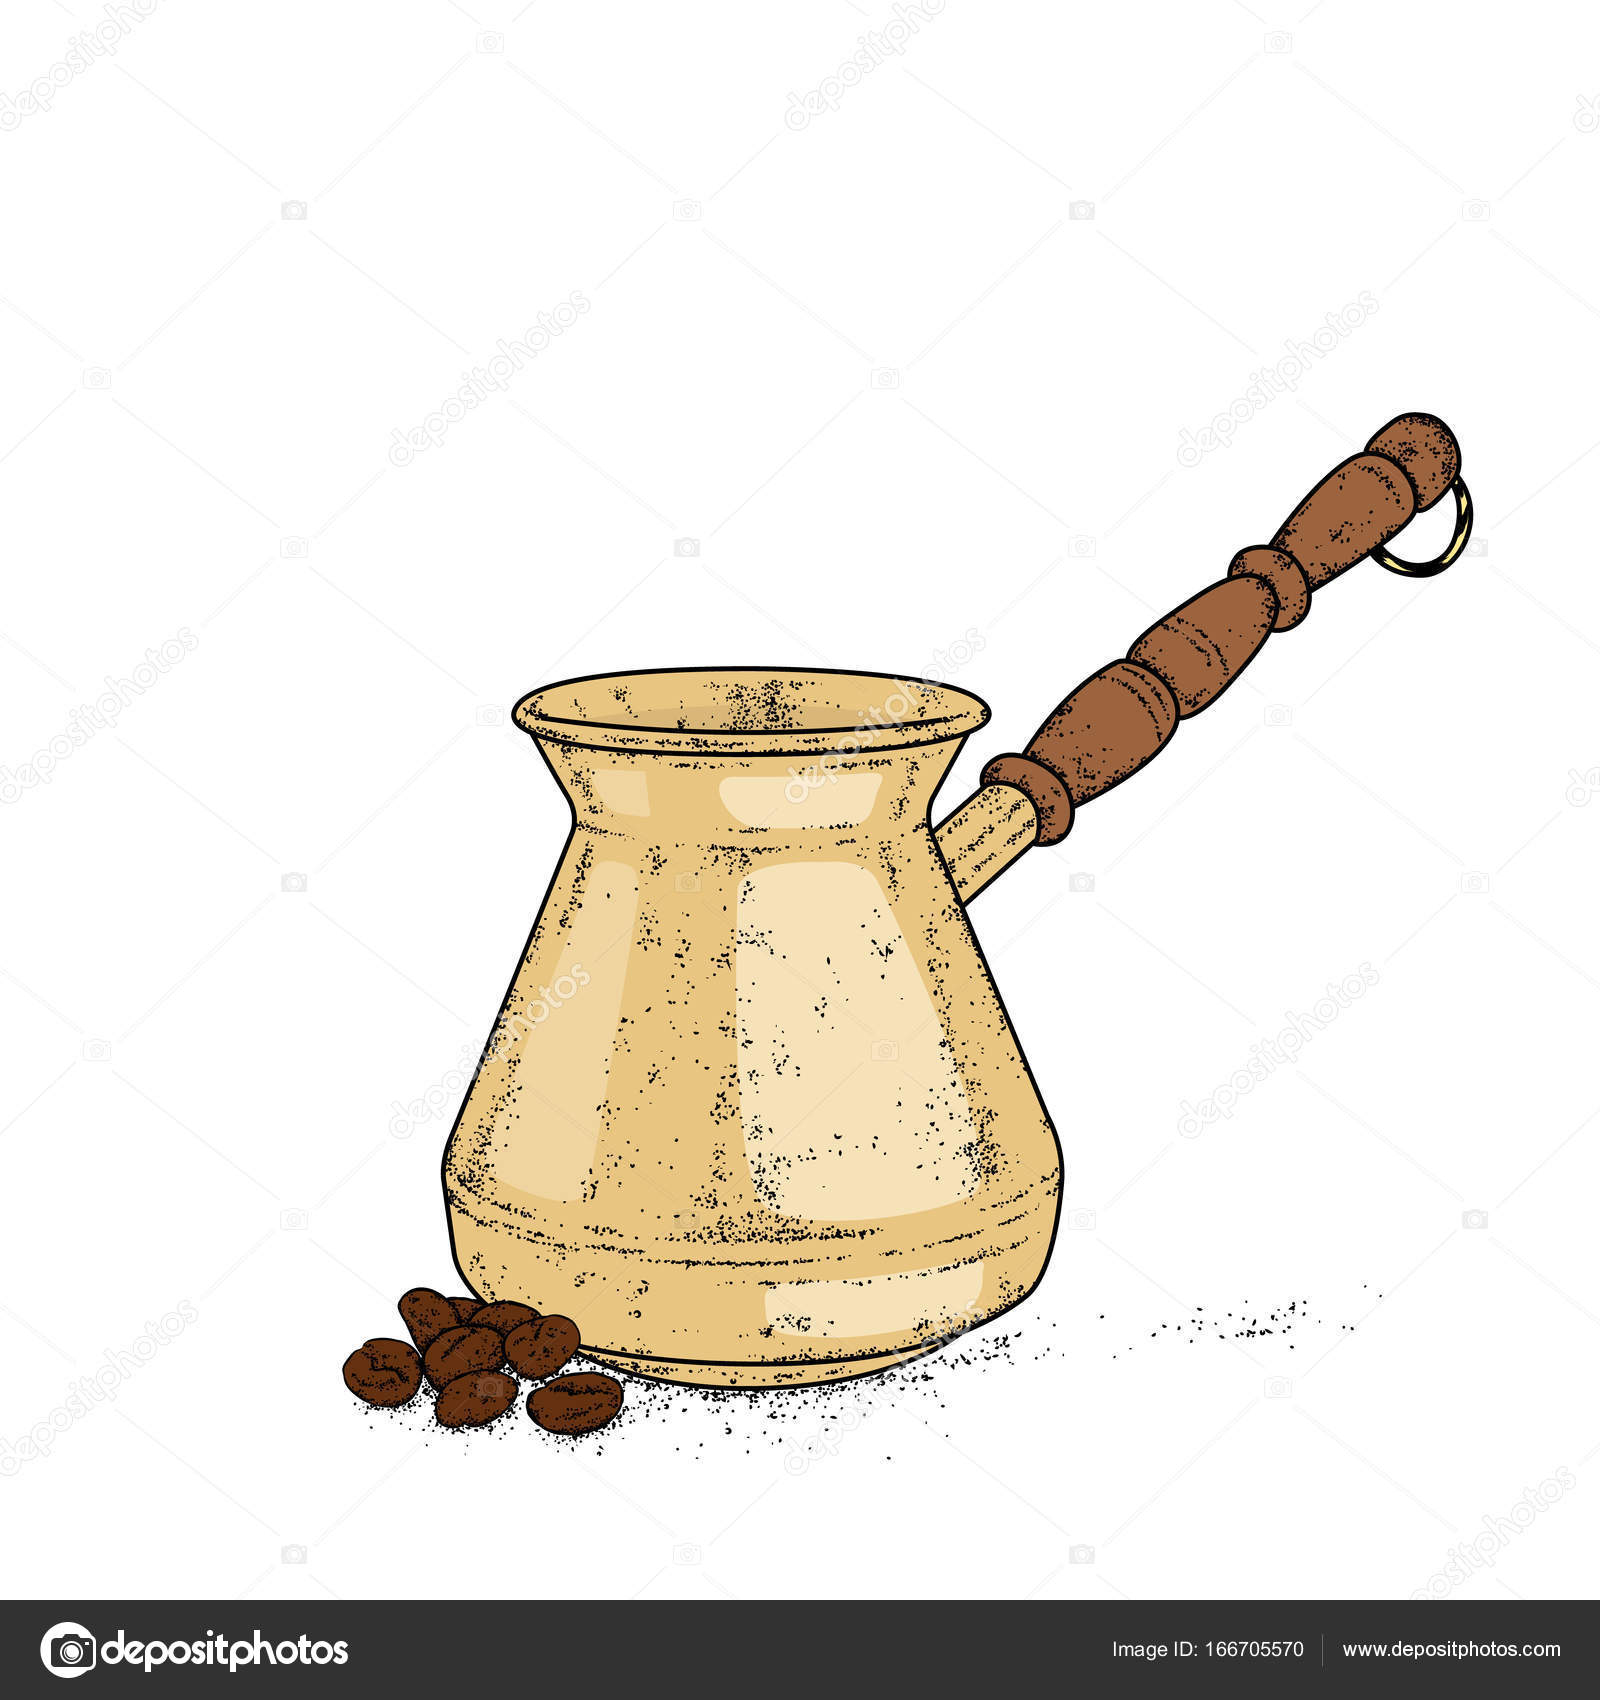 https://st3.depositphotos.com/13890838/16670/v/1600/depositphotos_166705570-stock-illustration-vintage-jezva-for-coffee-turka.jpg